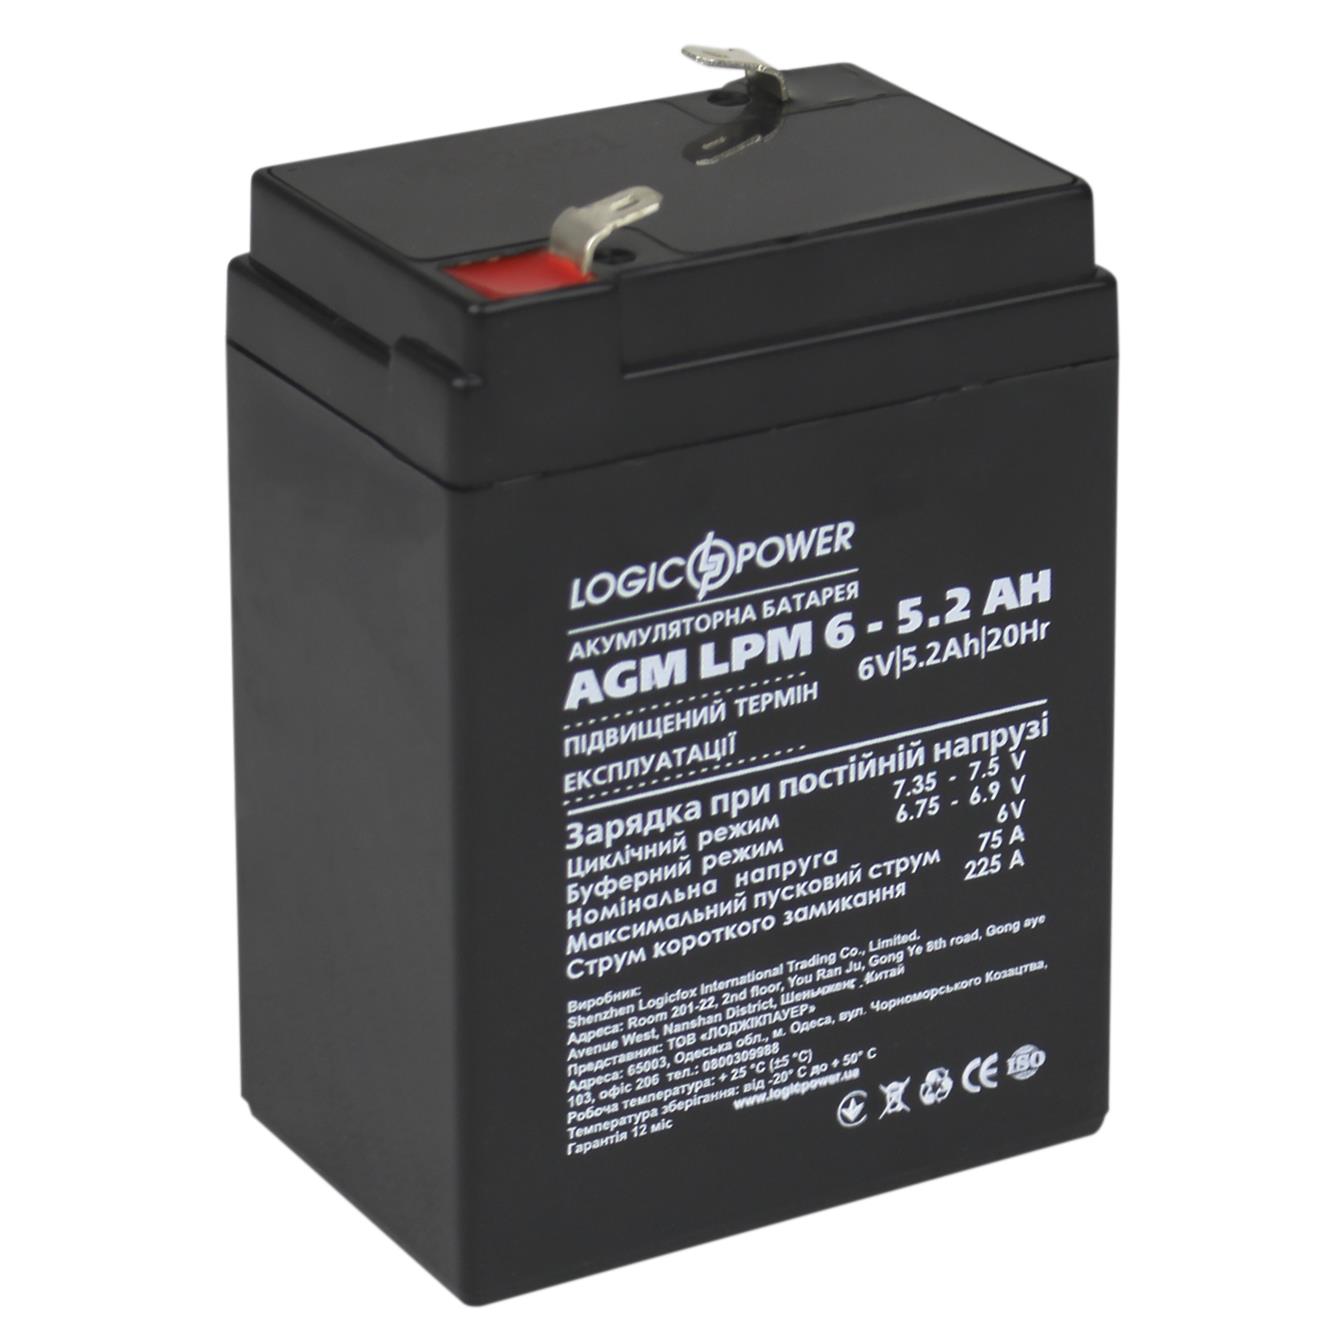 Аккумулятор свинцово-кислотный LogicPower AGM LPM 6V - 5.2 Ah (4158) цена 318.00 грн - фотография 2